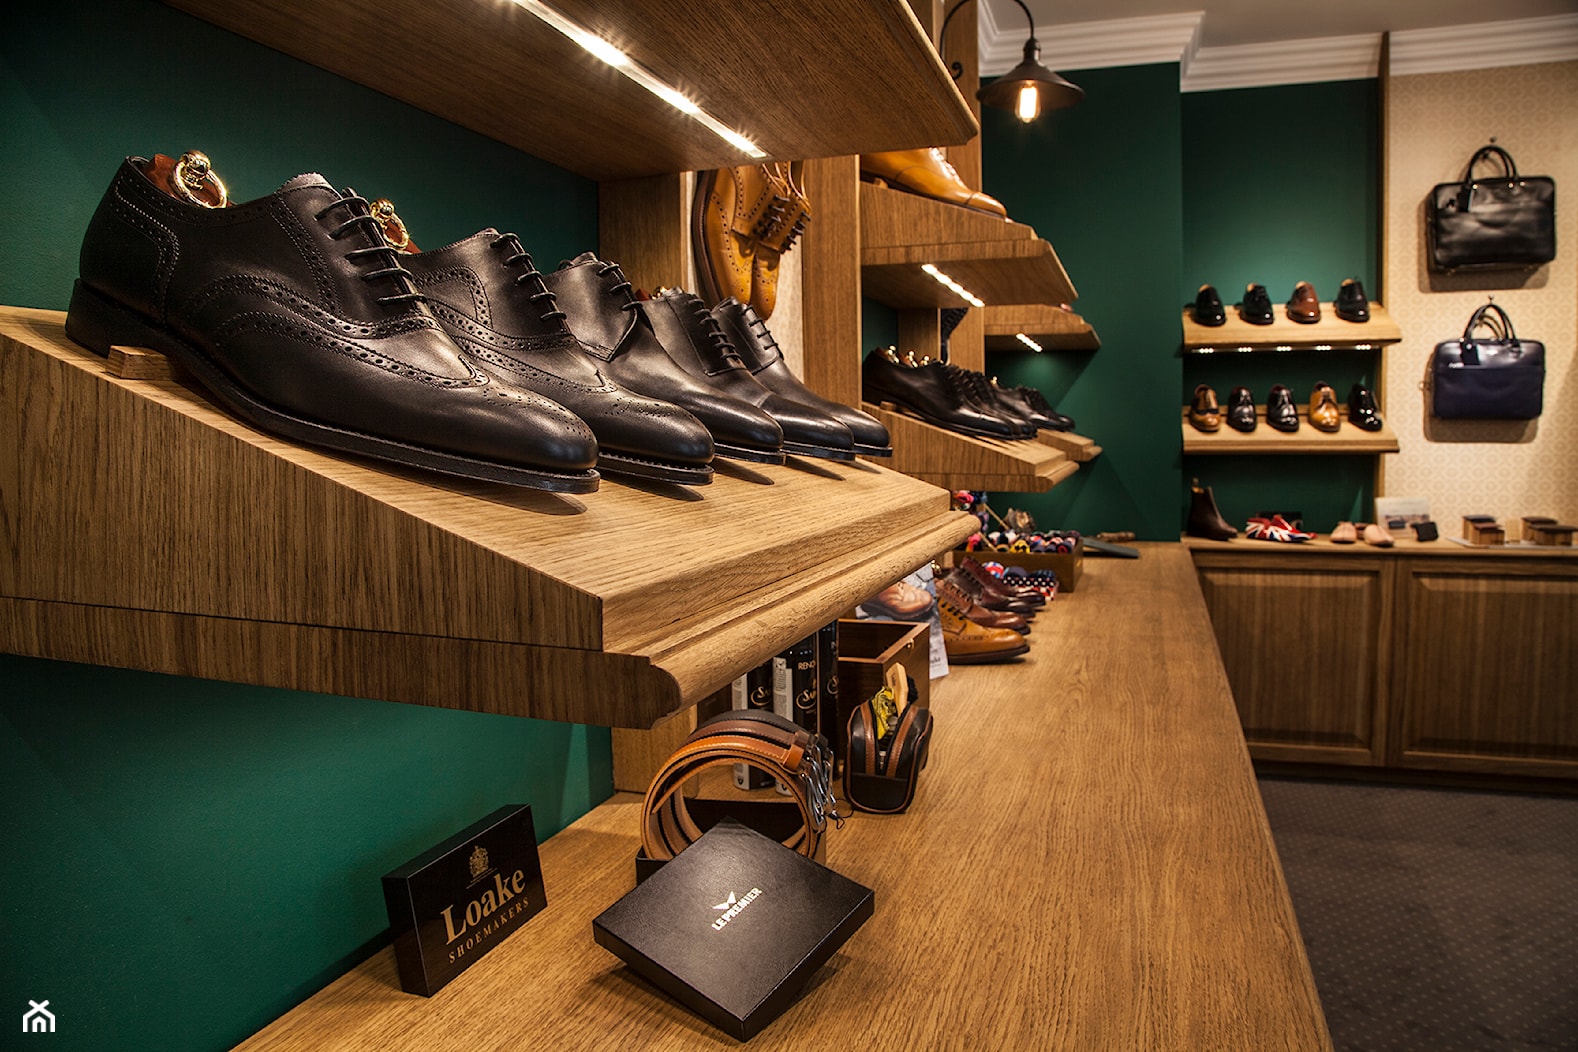 Loake Shoemakers Warszawa - zdjęcie od 370studio - Homebook